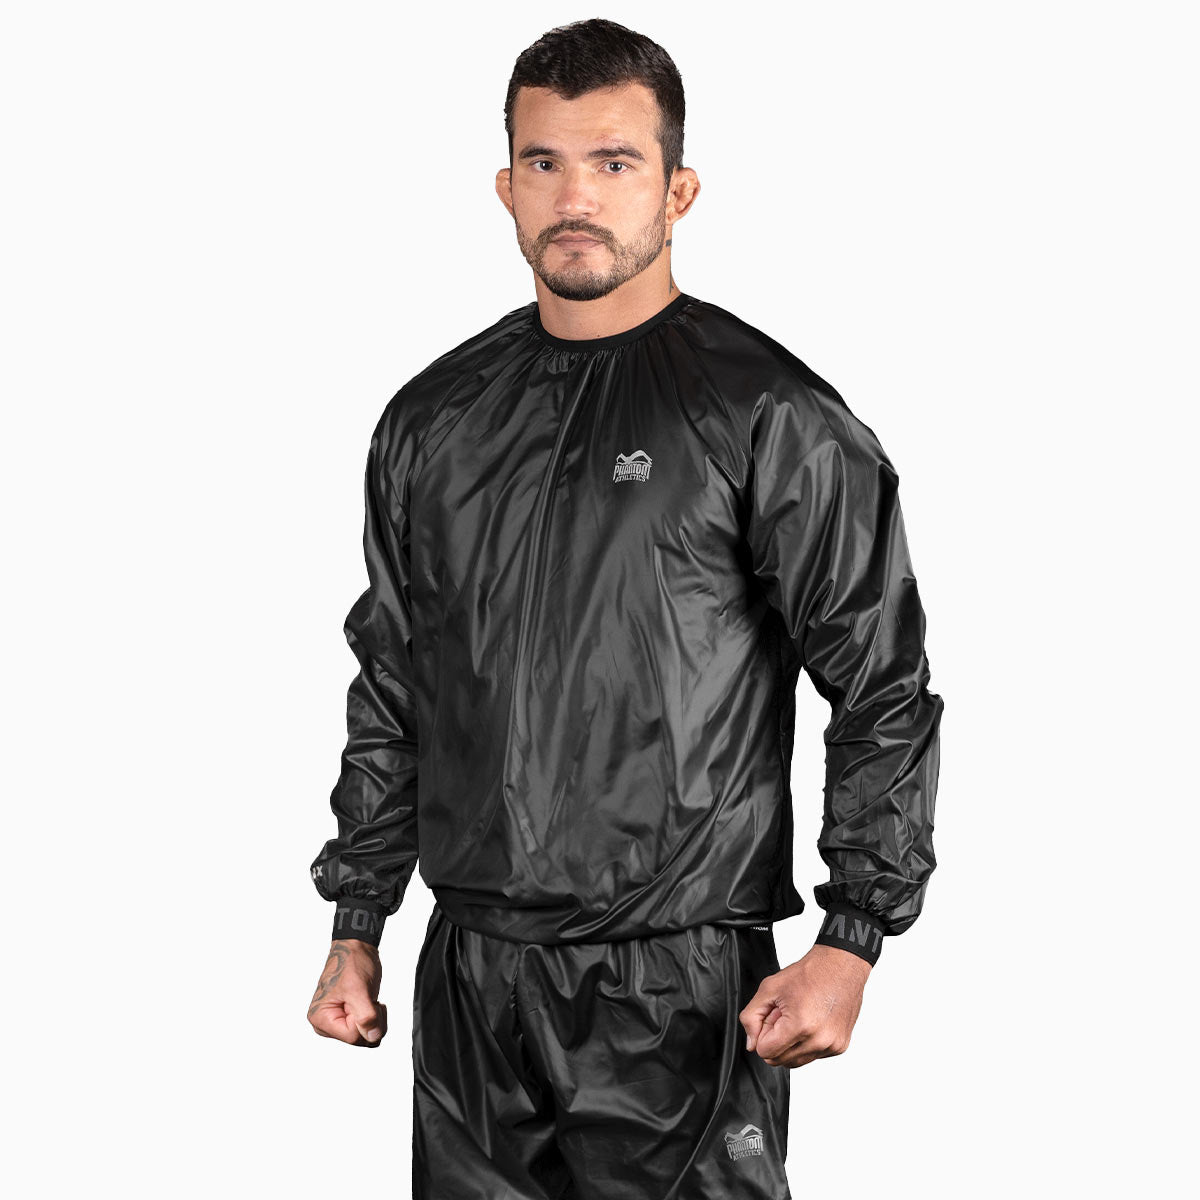 Phantom NOMAX-S sweat suit for weight training